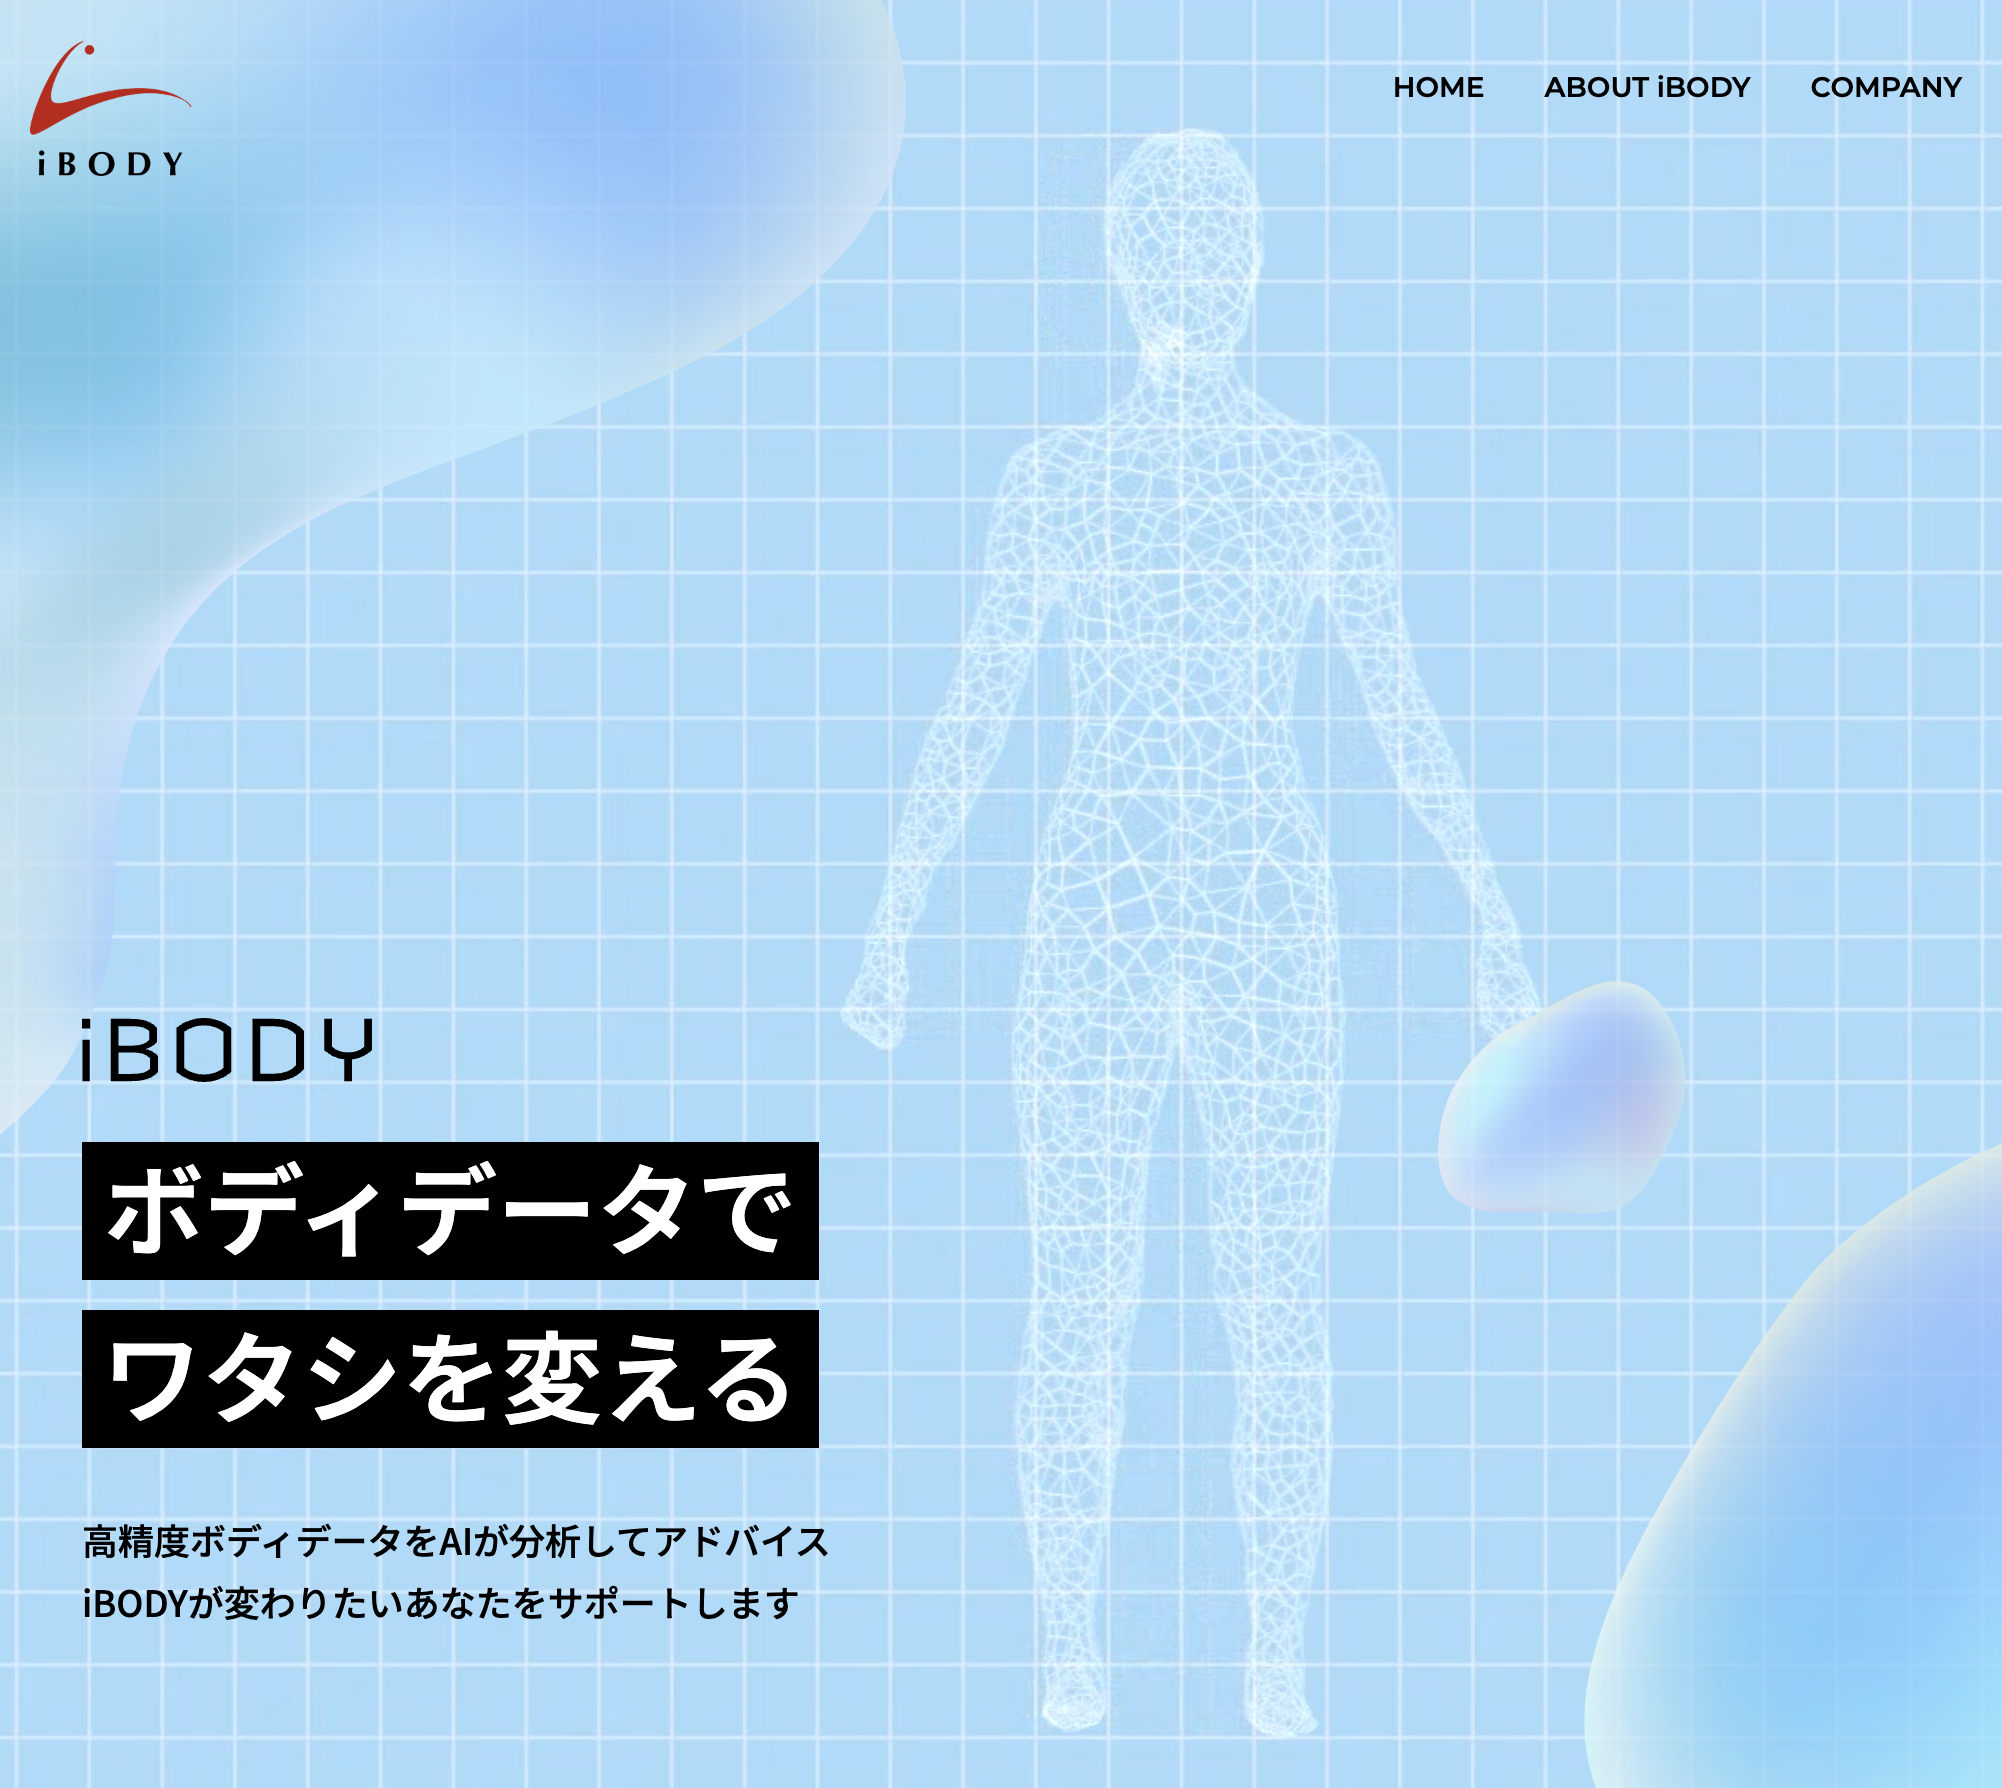 iBODY JAPAN 株式会社